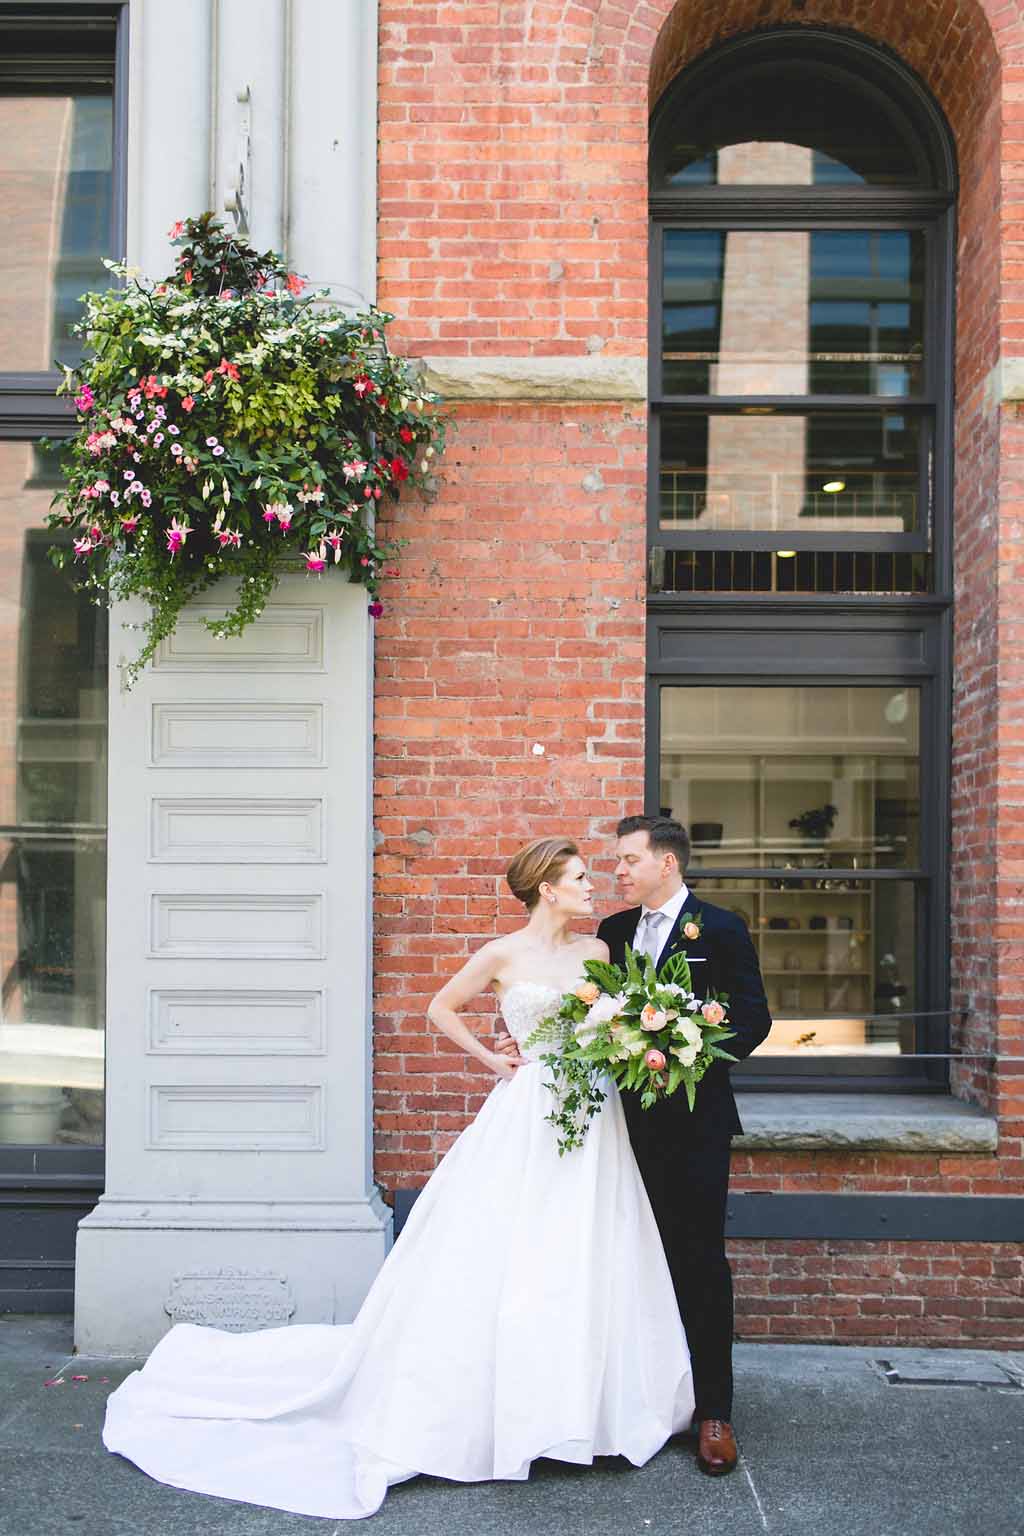 Bella Fiori, Seattle Wedding Florist, Fairmont Olympic Hotel - bridal bouquet with lush foliage, peach and blush flowers.